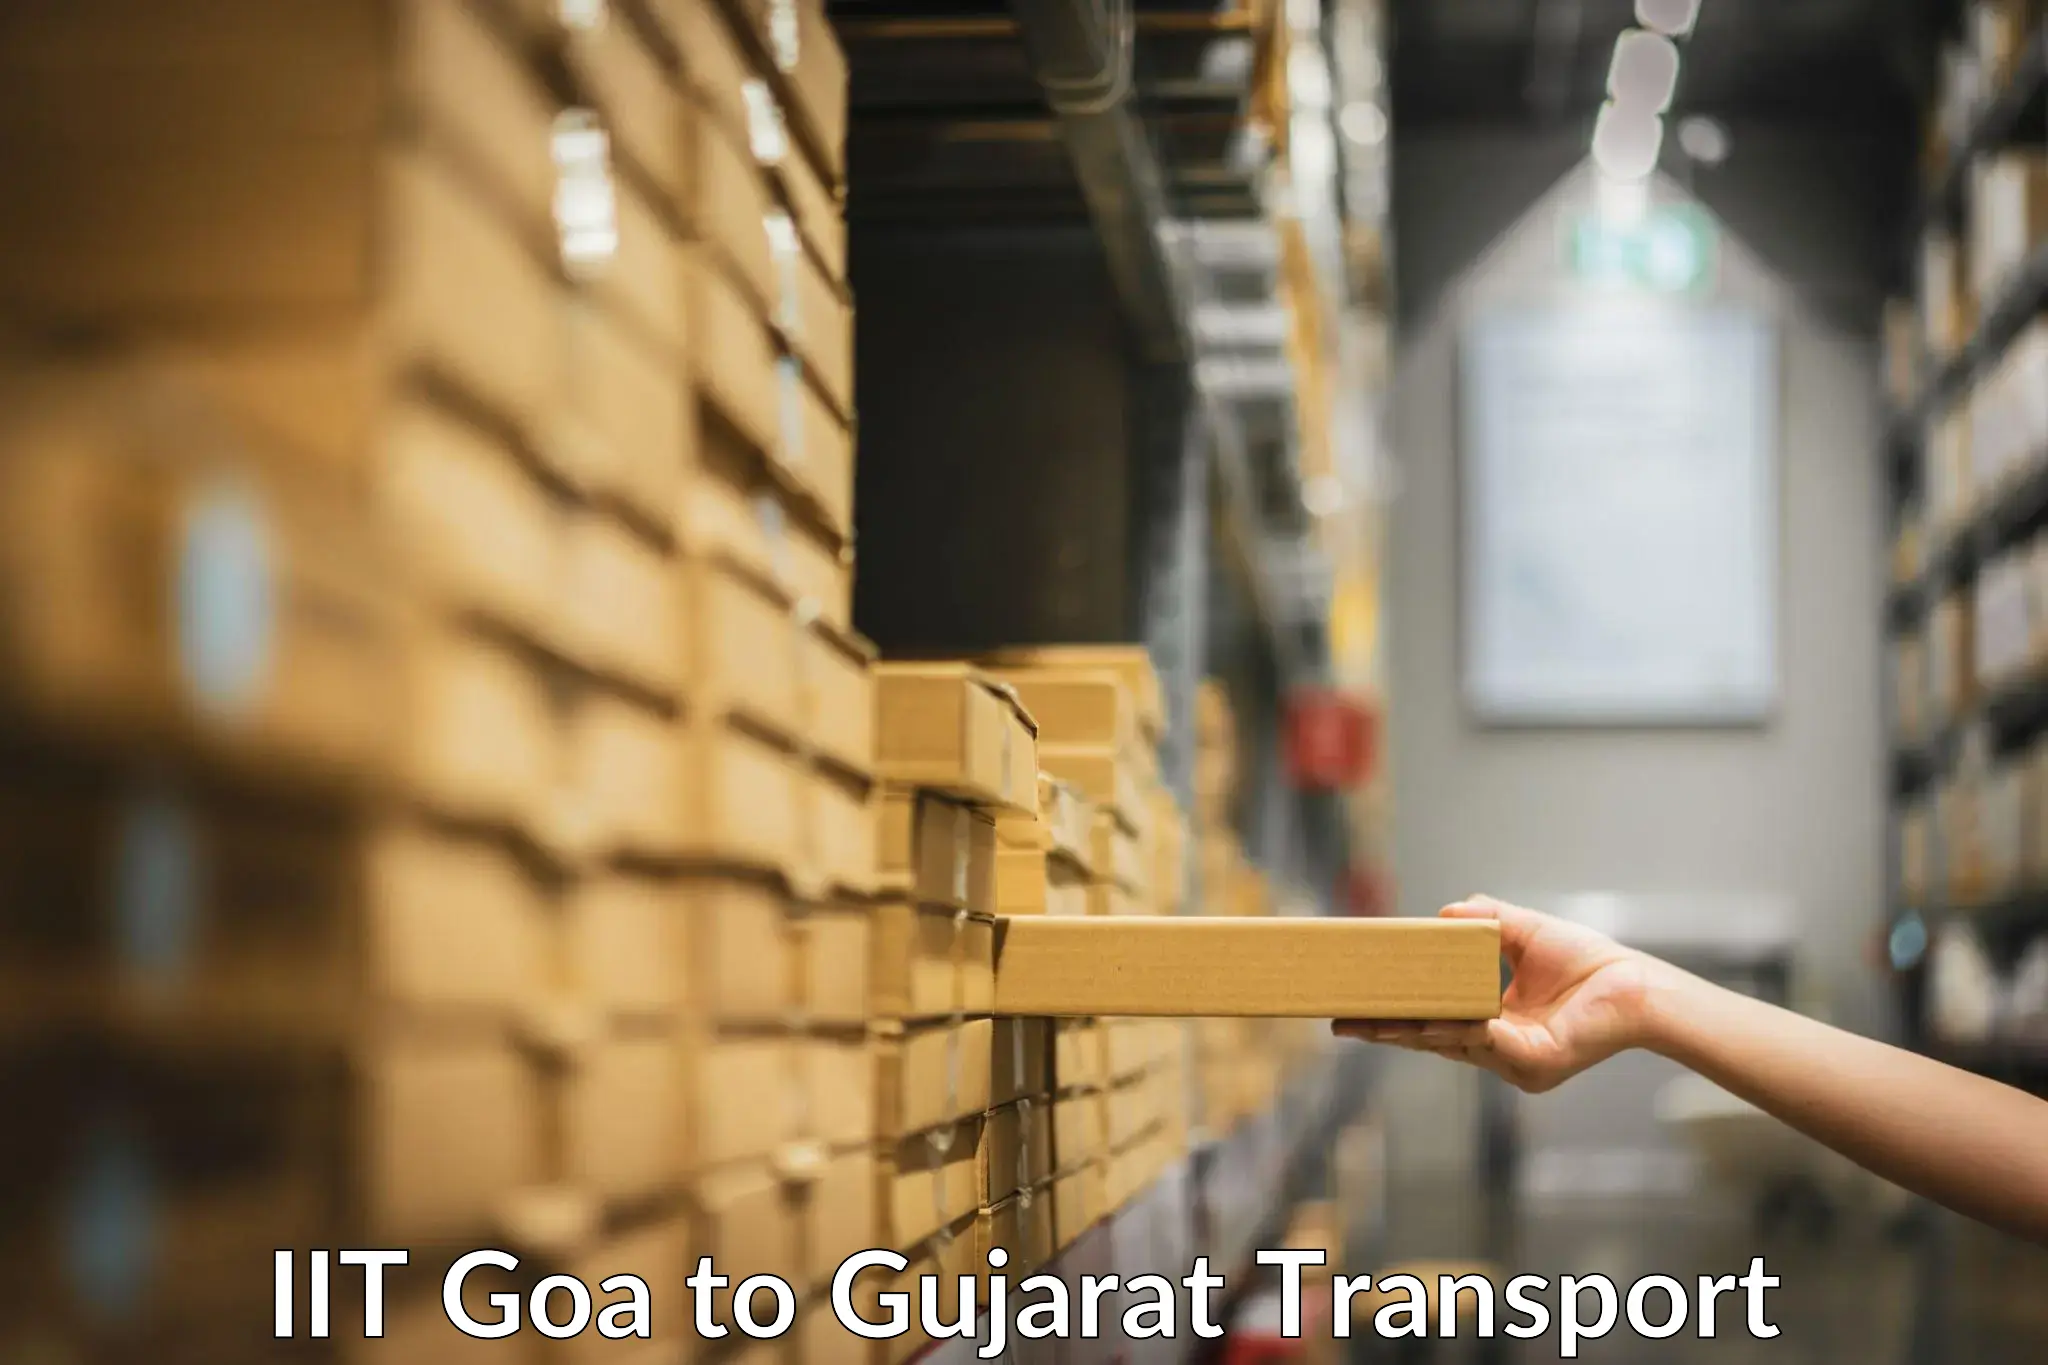 Bike shipping service IIT Goa to Gujarat